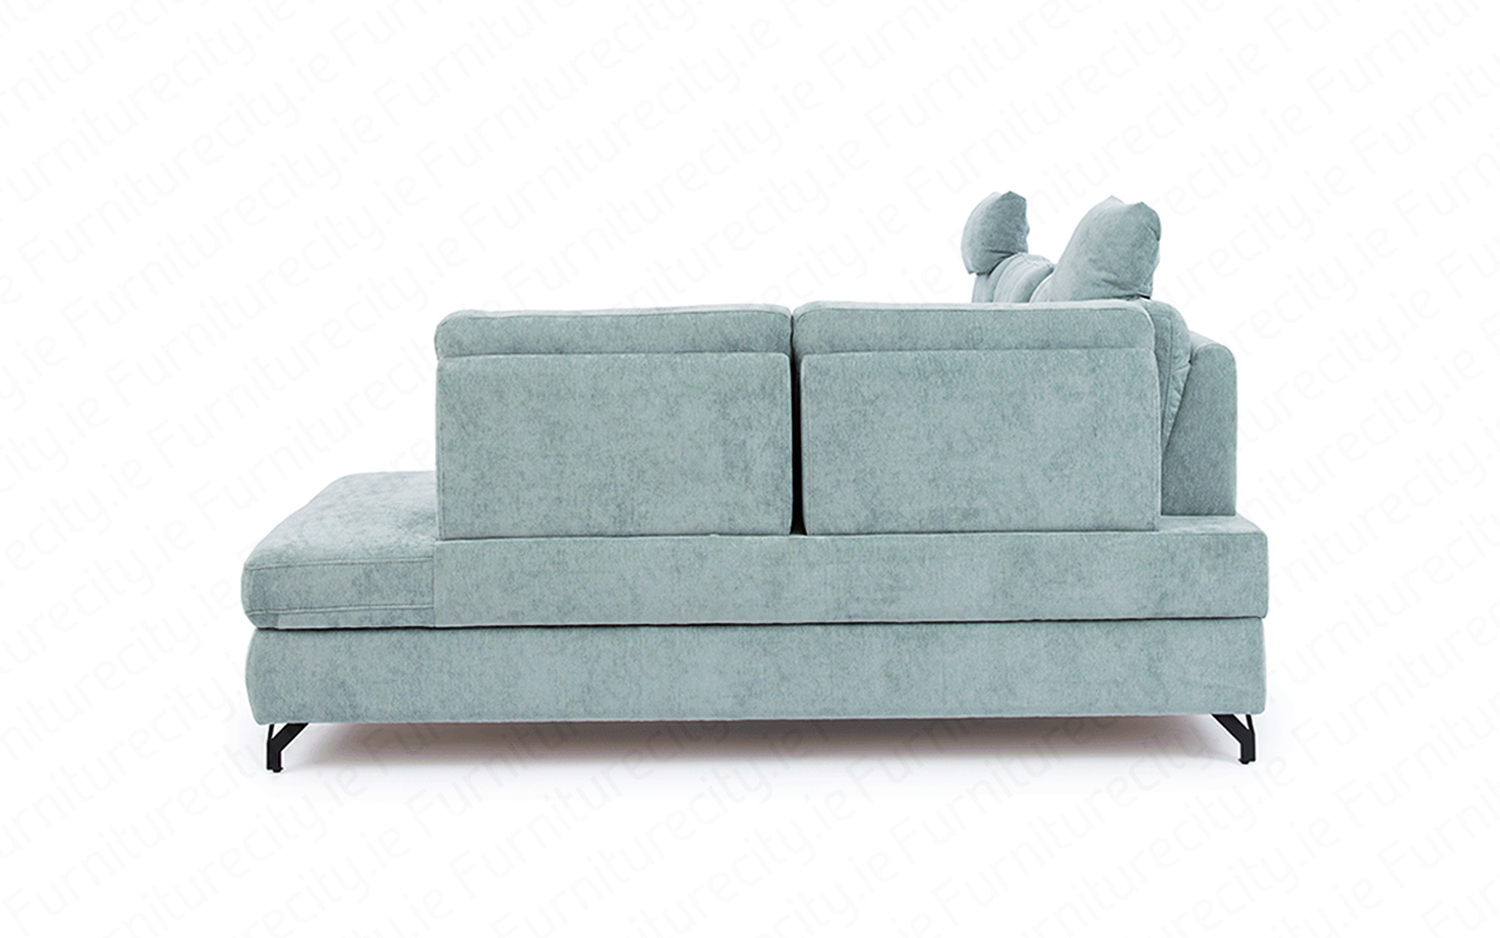 Sofa bed NOVA U-SHAPE by Furniturecity.ie